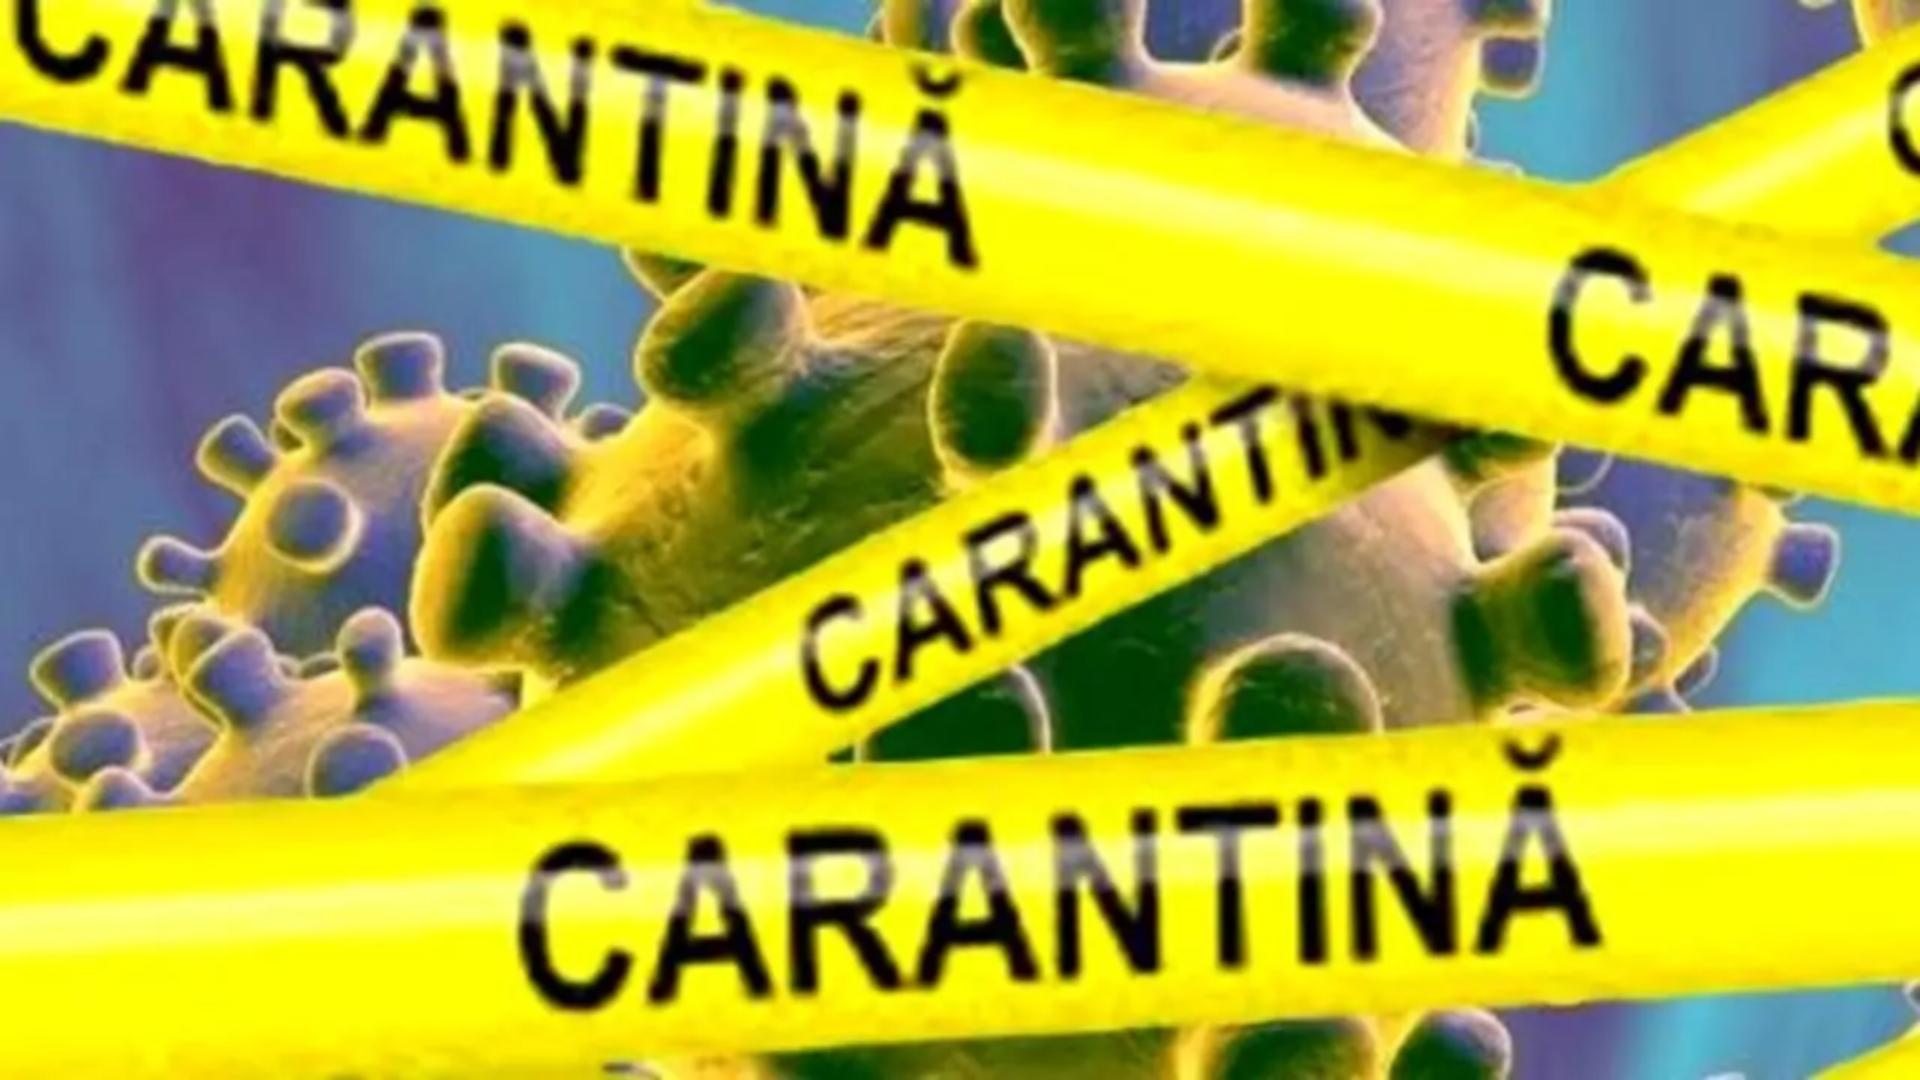 Carantină coronavirus